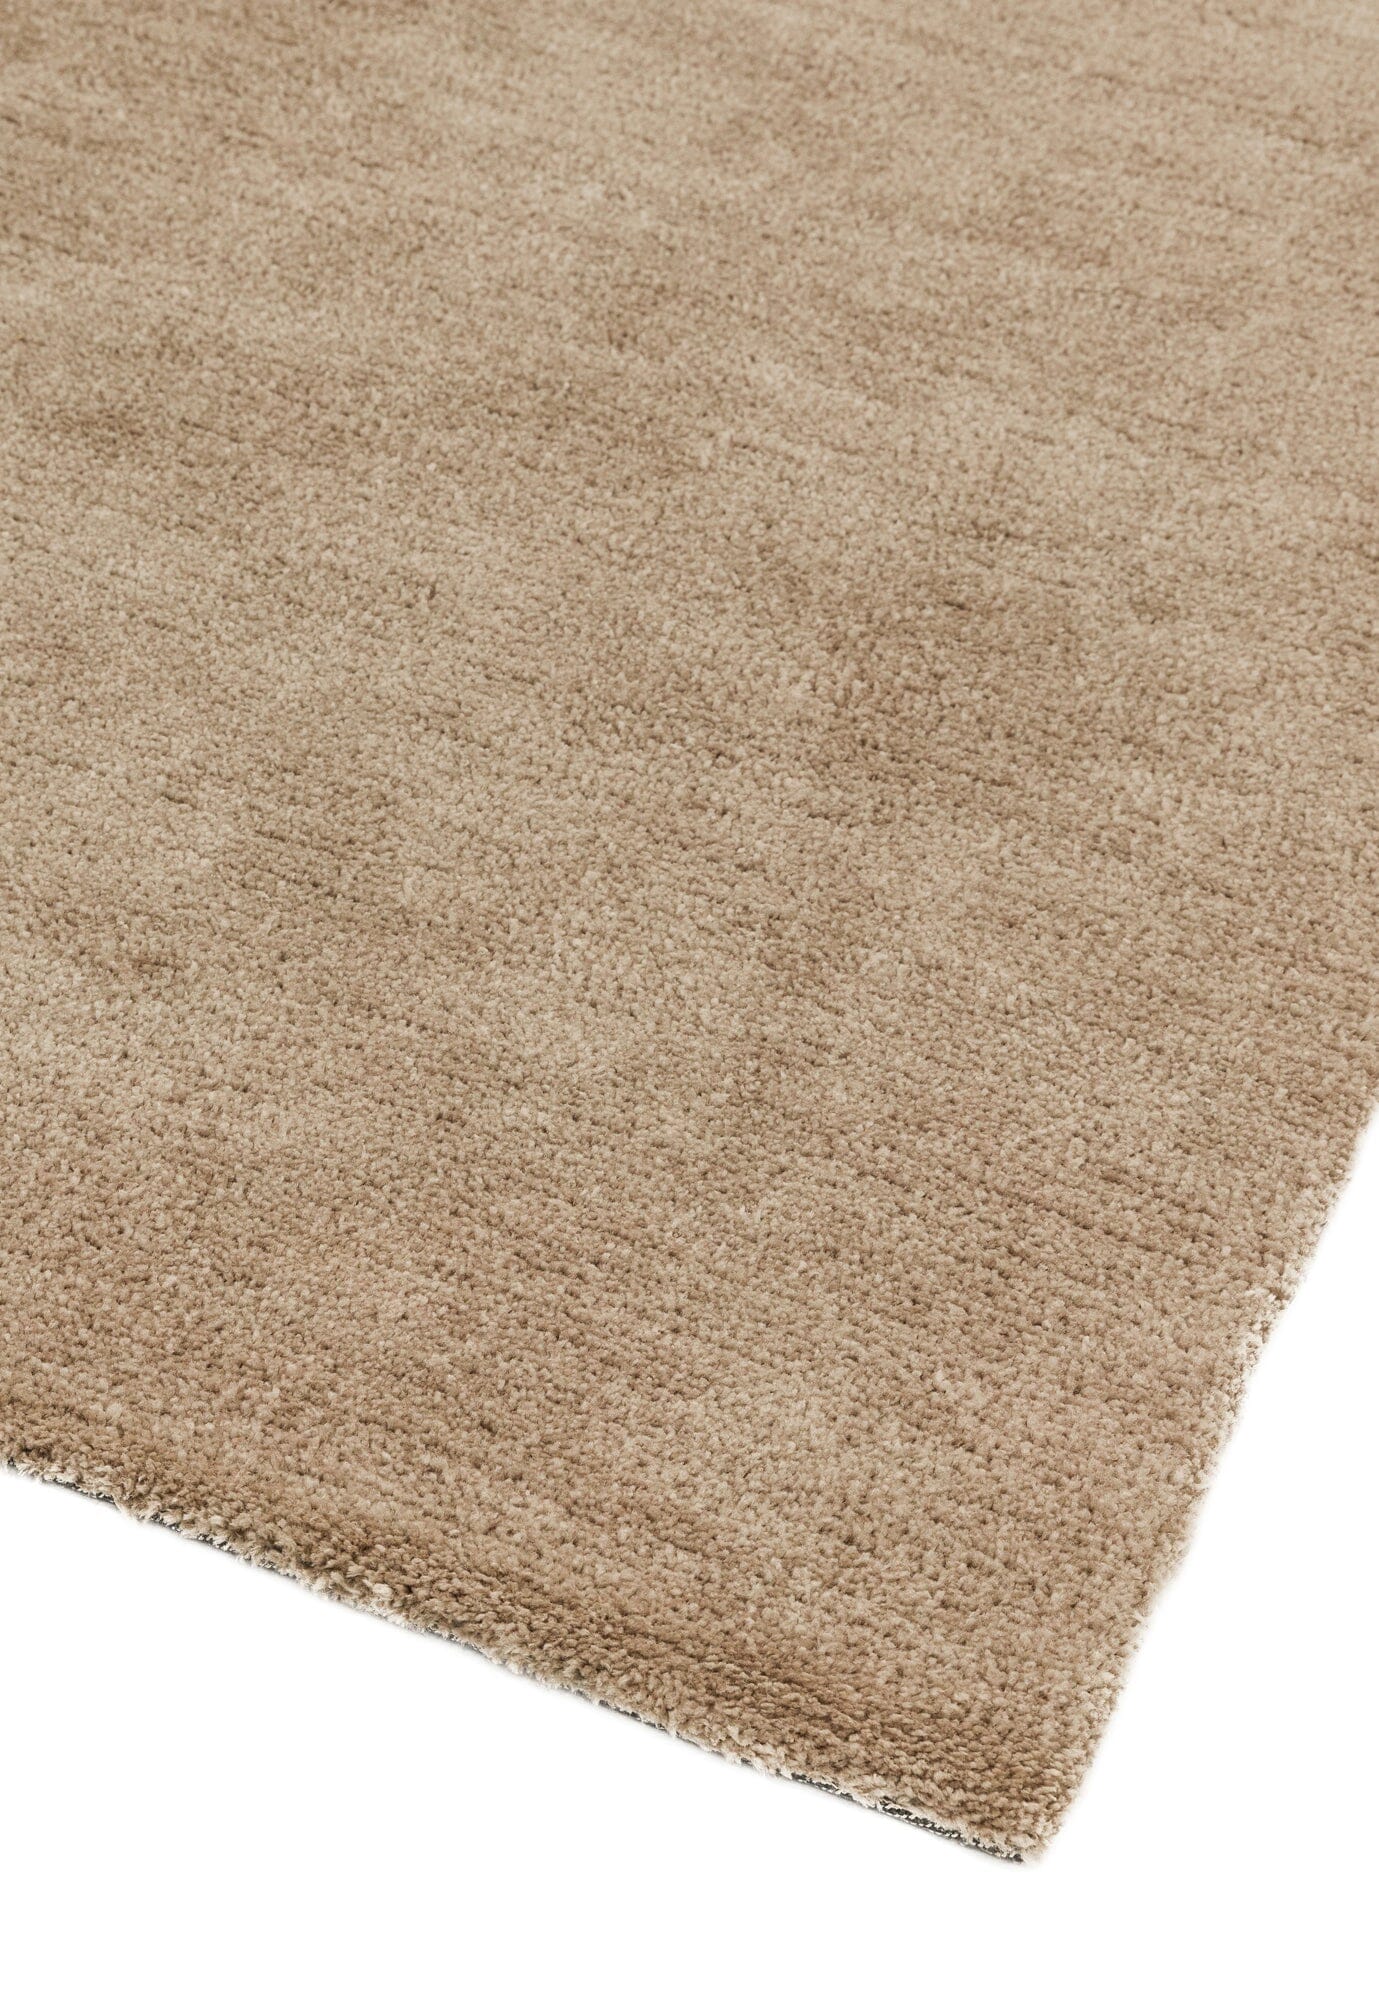 Asiatic Carpets Milo Table Tufted Rug Sand - 200 x 290cm